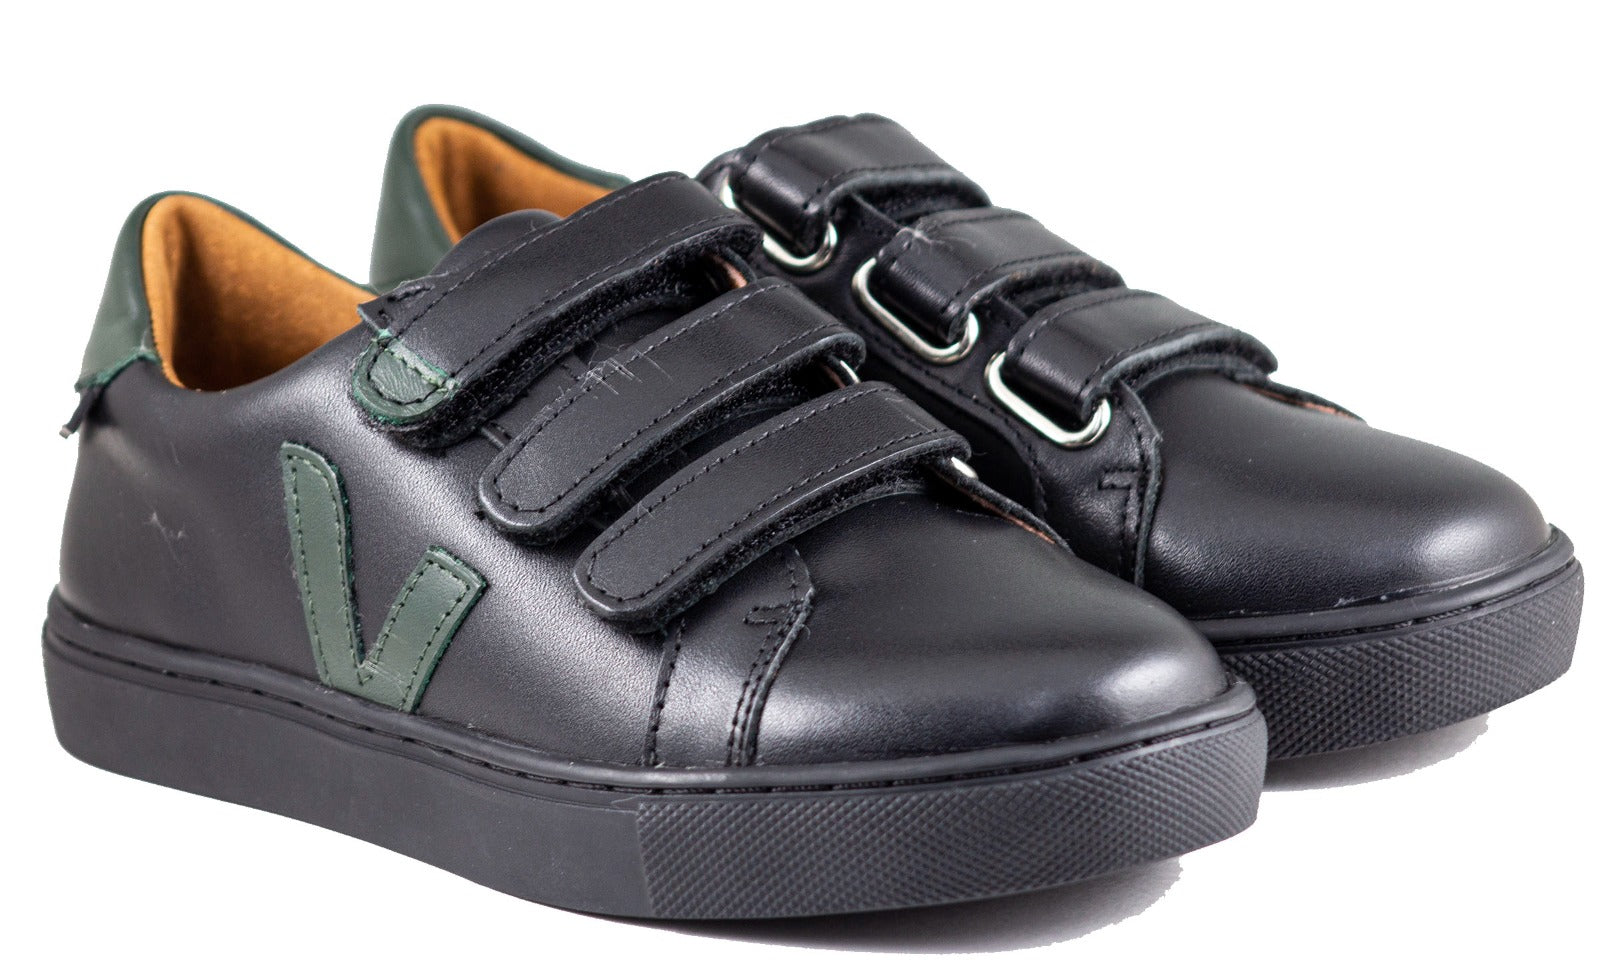 Venenttini Dillon 4 Boy's Black/Green Leather Casual Shoes